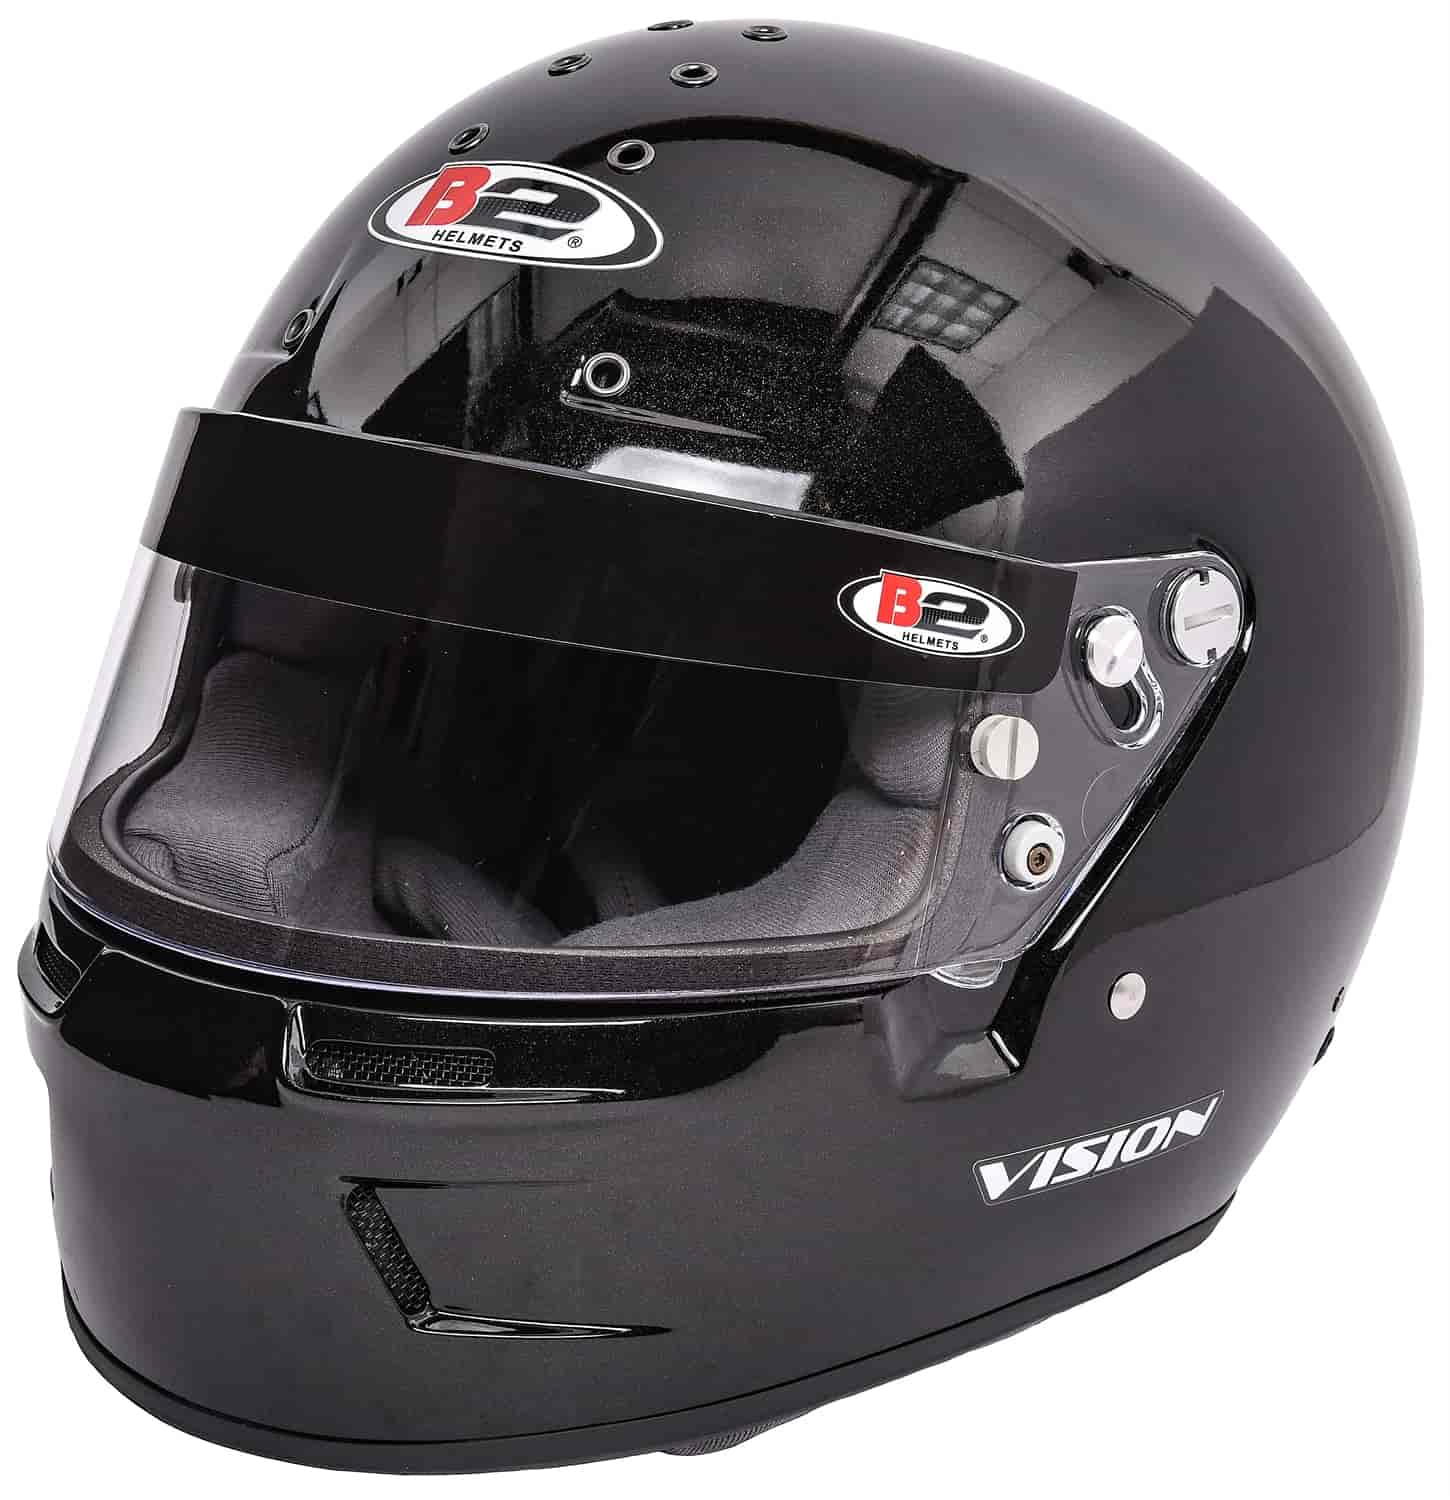 Vision Helmet Black - X-Large